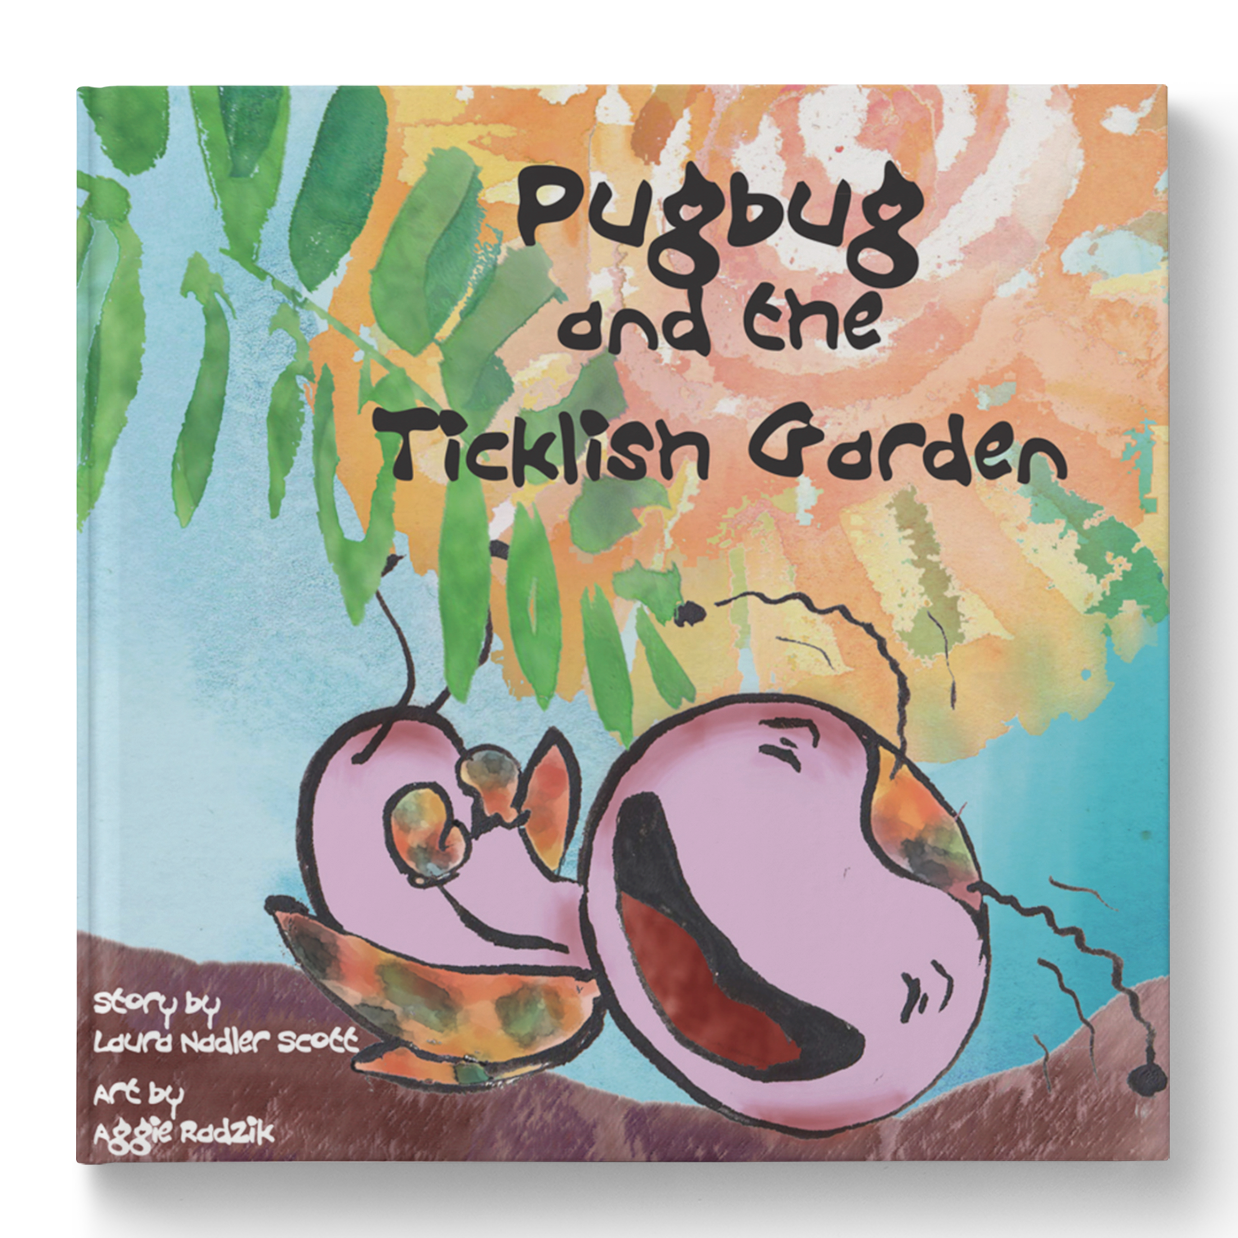 Pugbug and the Ticklish Garden